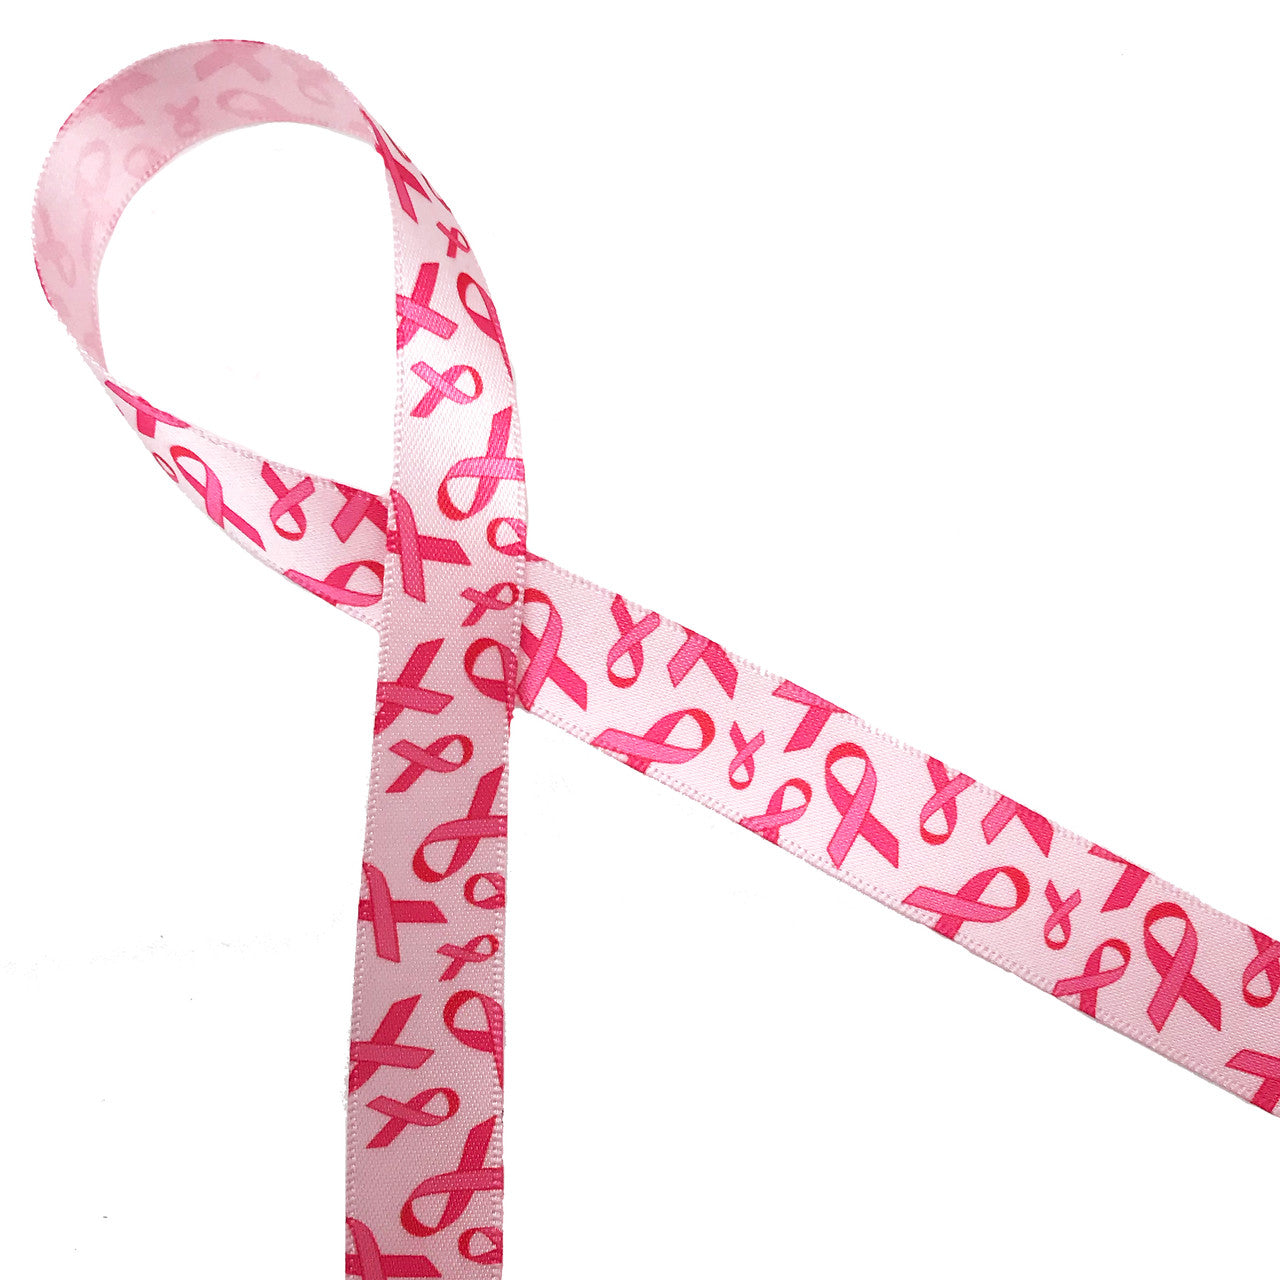 Breast Cancer Awareness ribbon printed on 5/8 pink single face satin